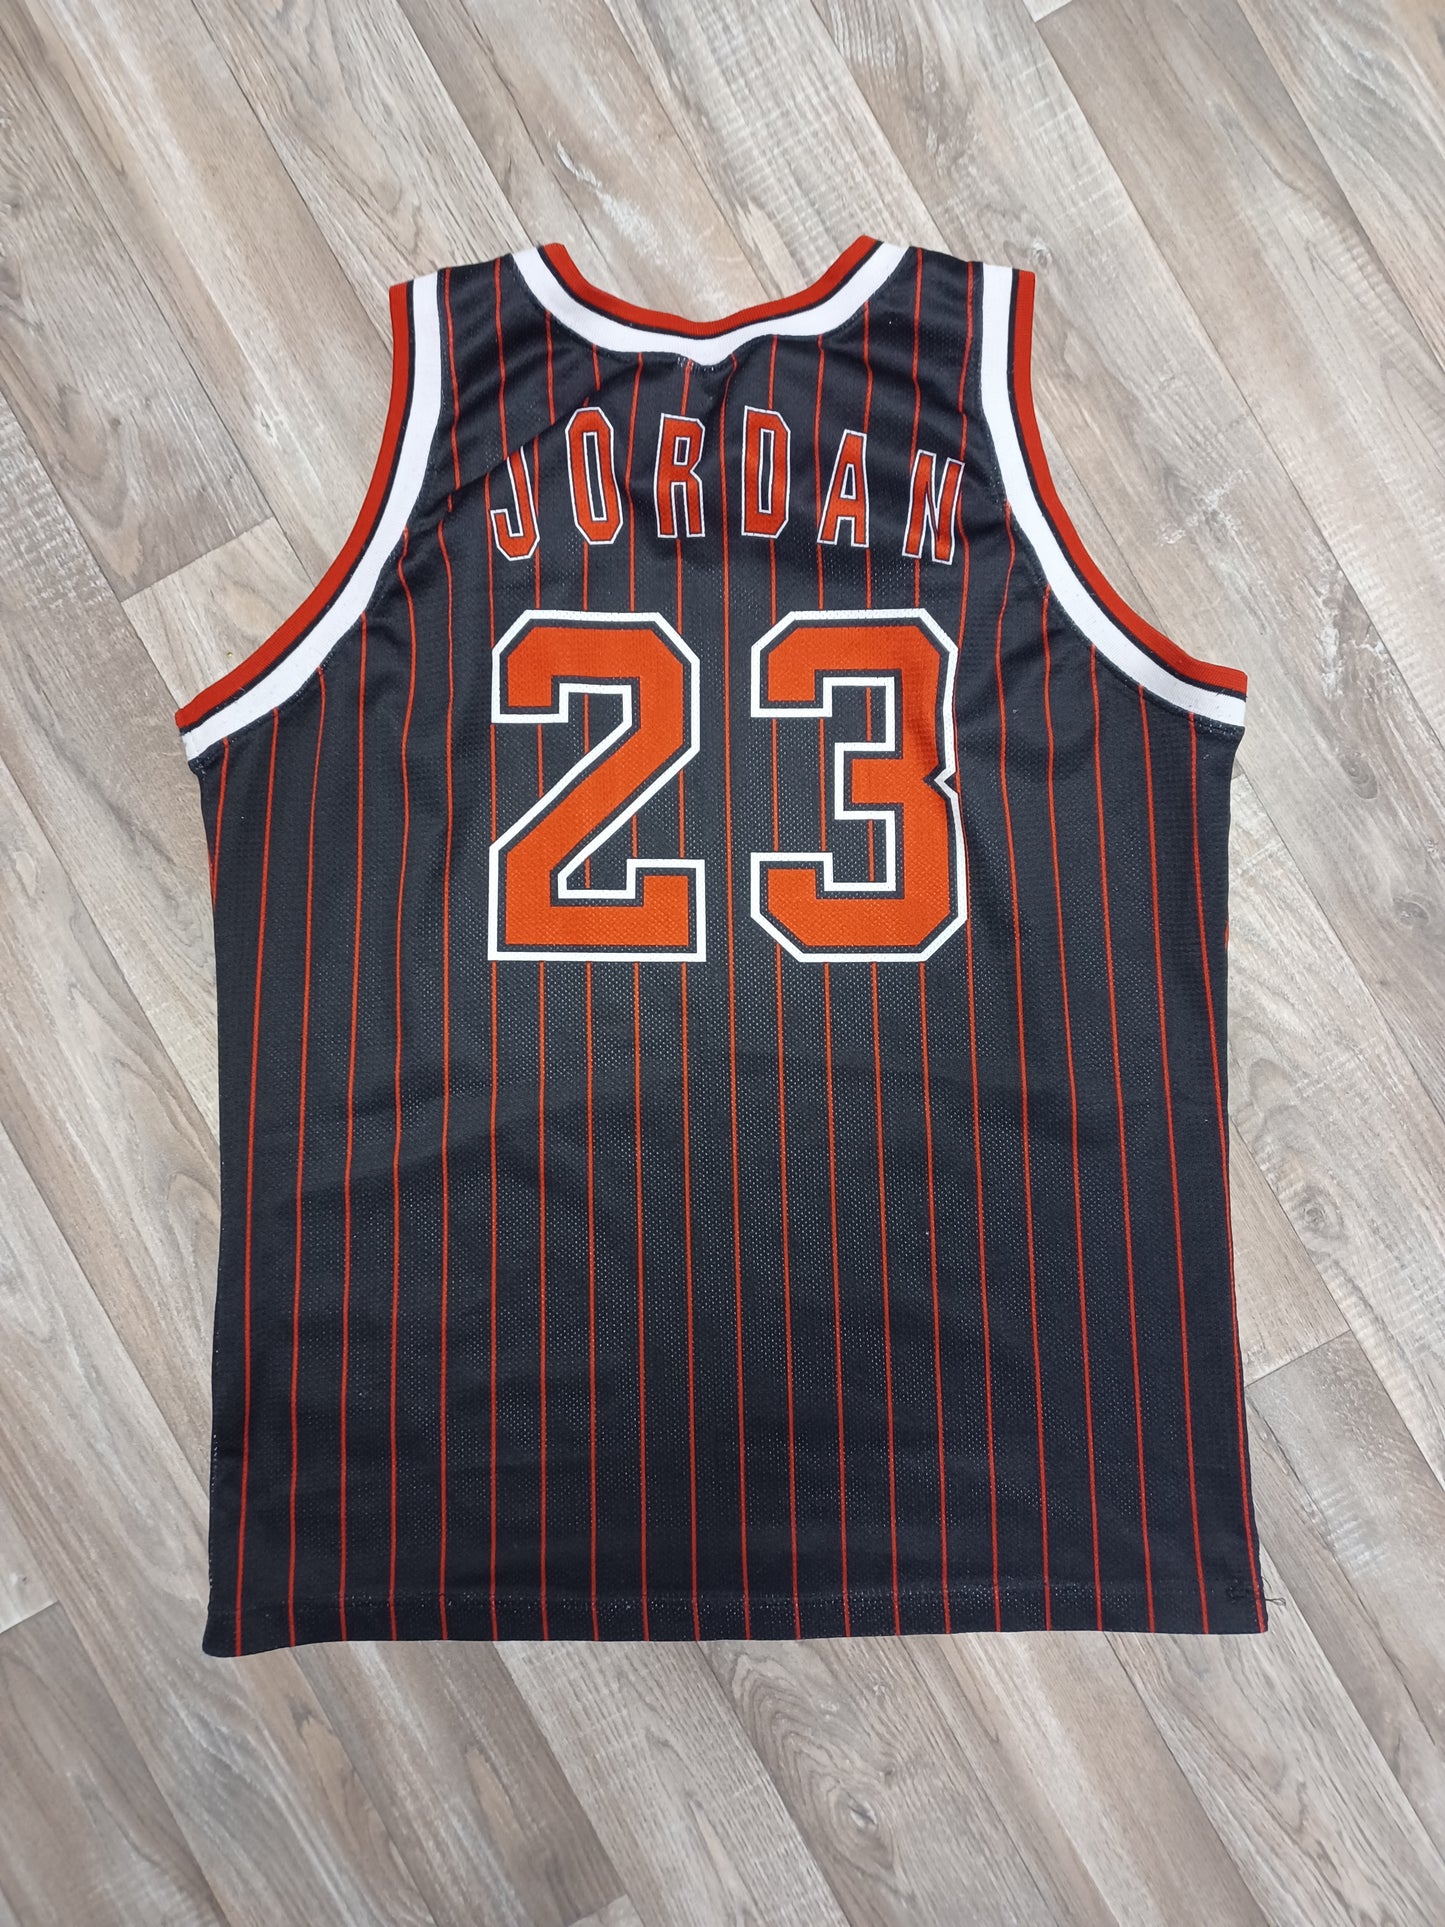 Michael Jordan Chicago Bulls Jersey Size XL